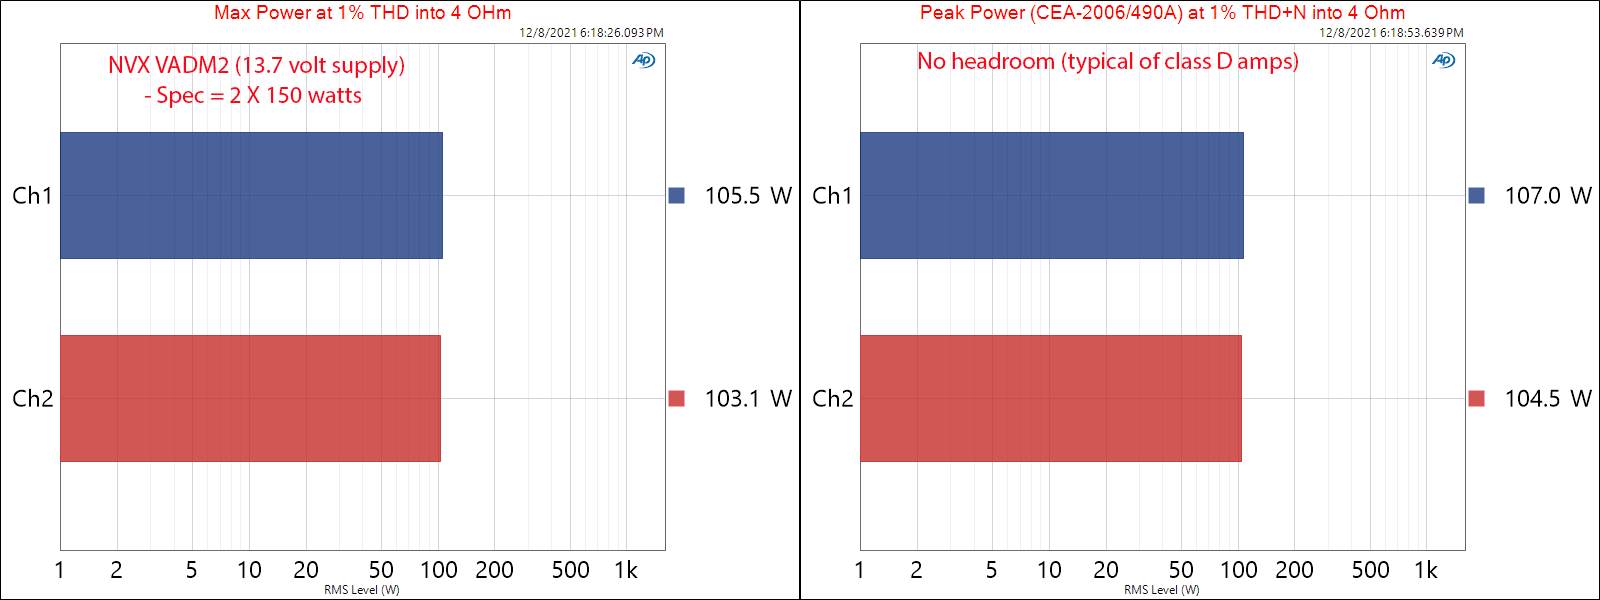 NVX Vadm2 Measurements Max and Peak Power into 4 ohm Class D Car Amplifier.png